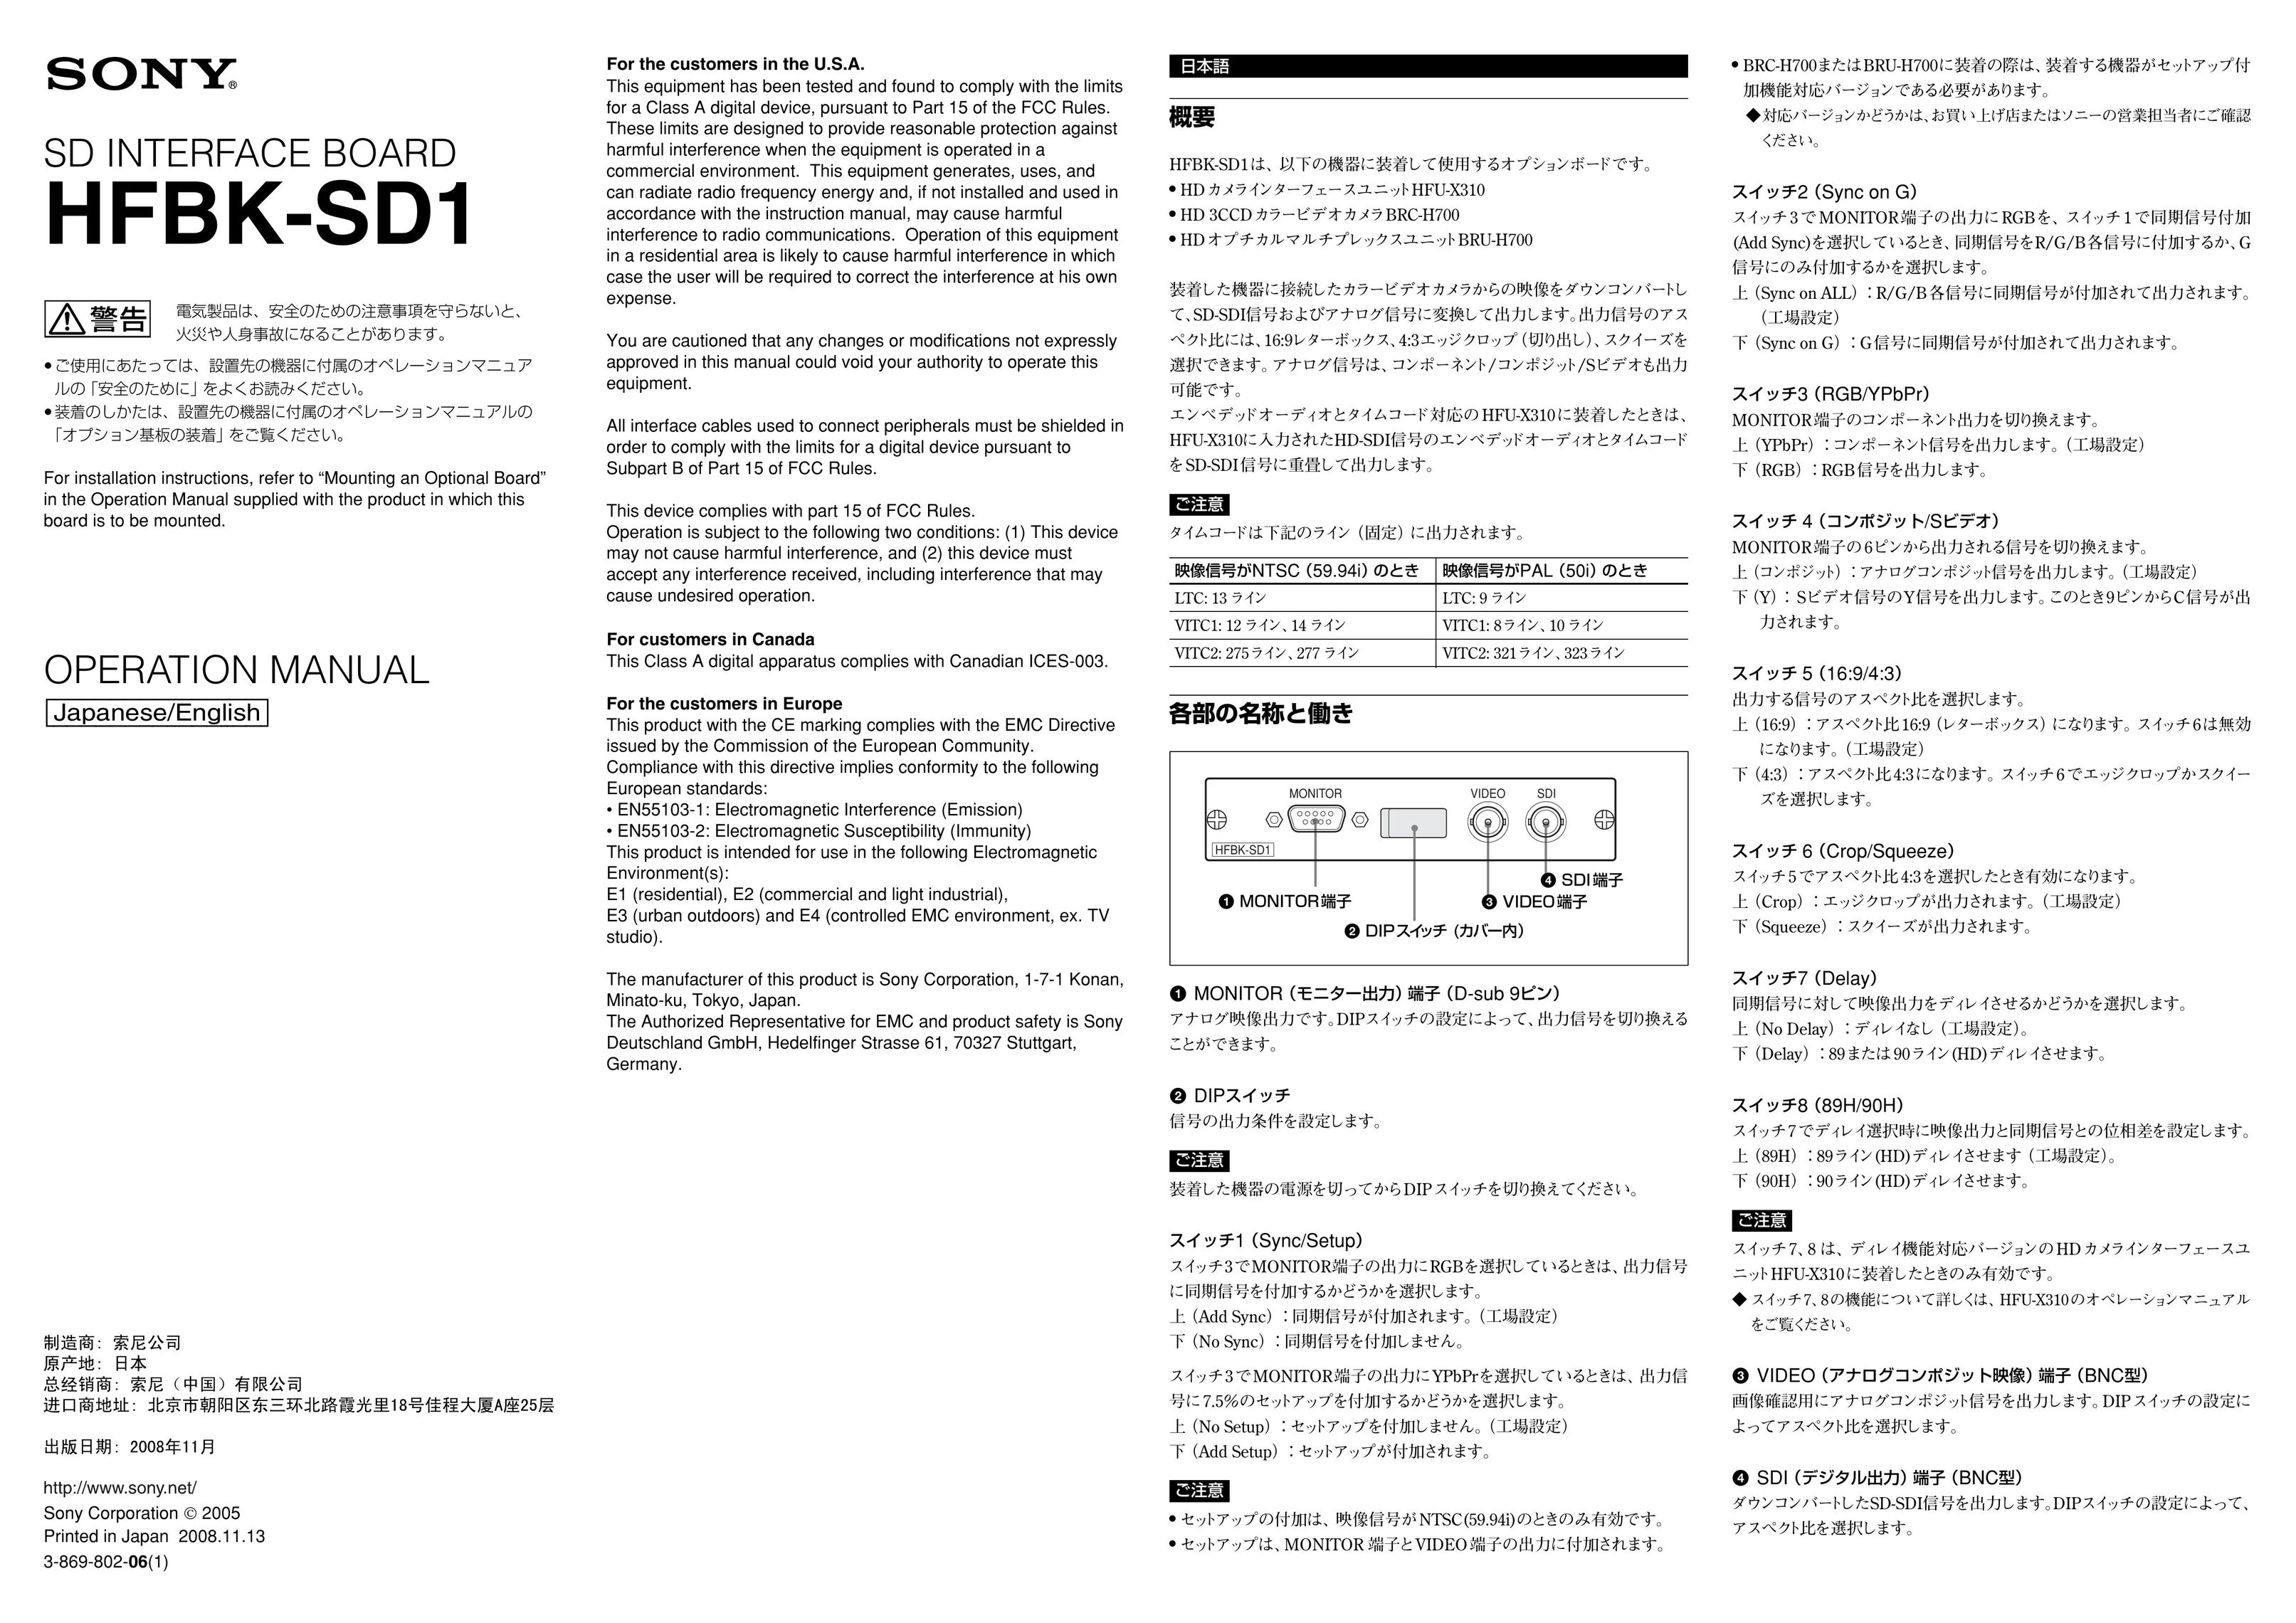 Sony HFBK-SD1 Network Card User Manual